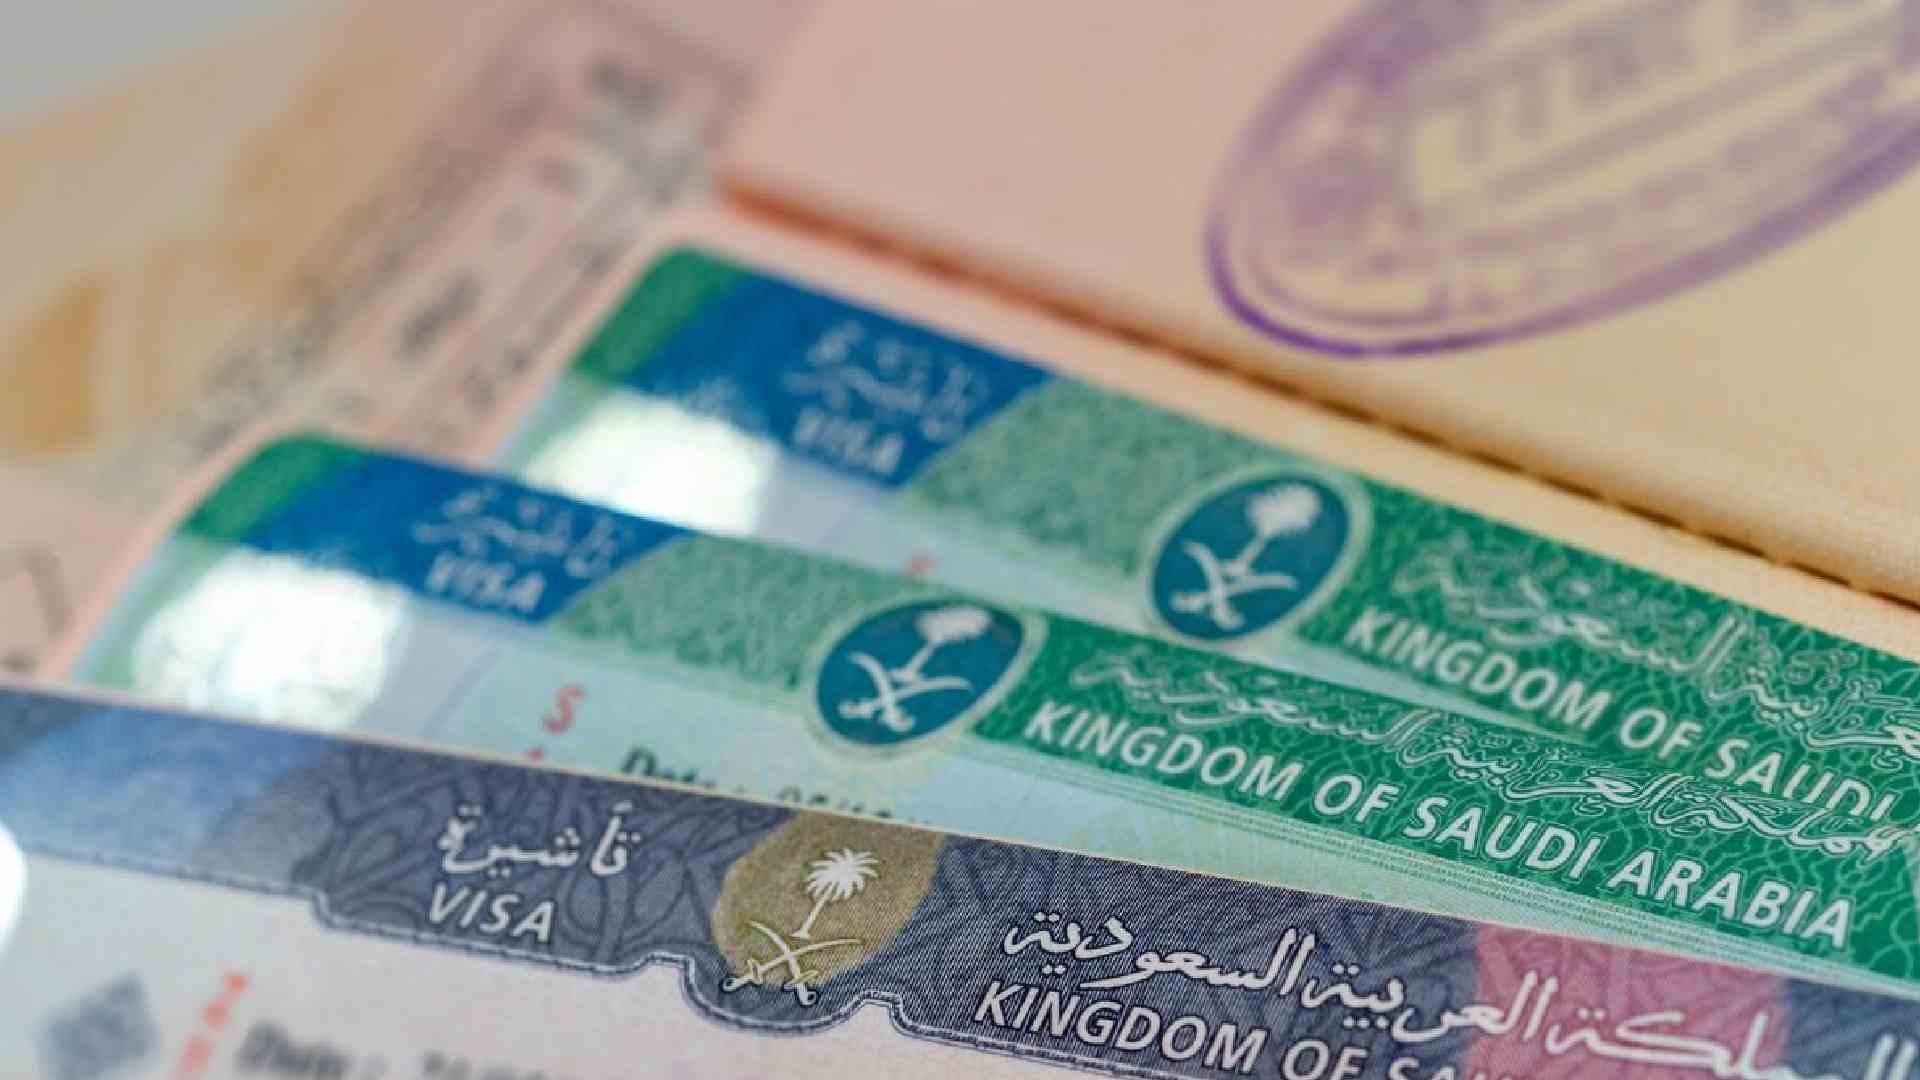 saudi visa for uae residents